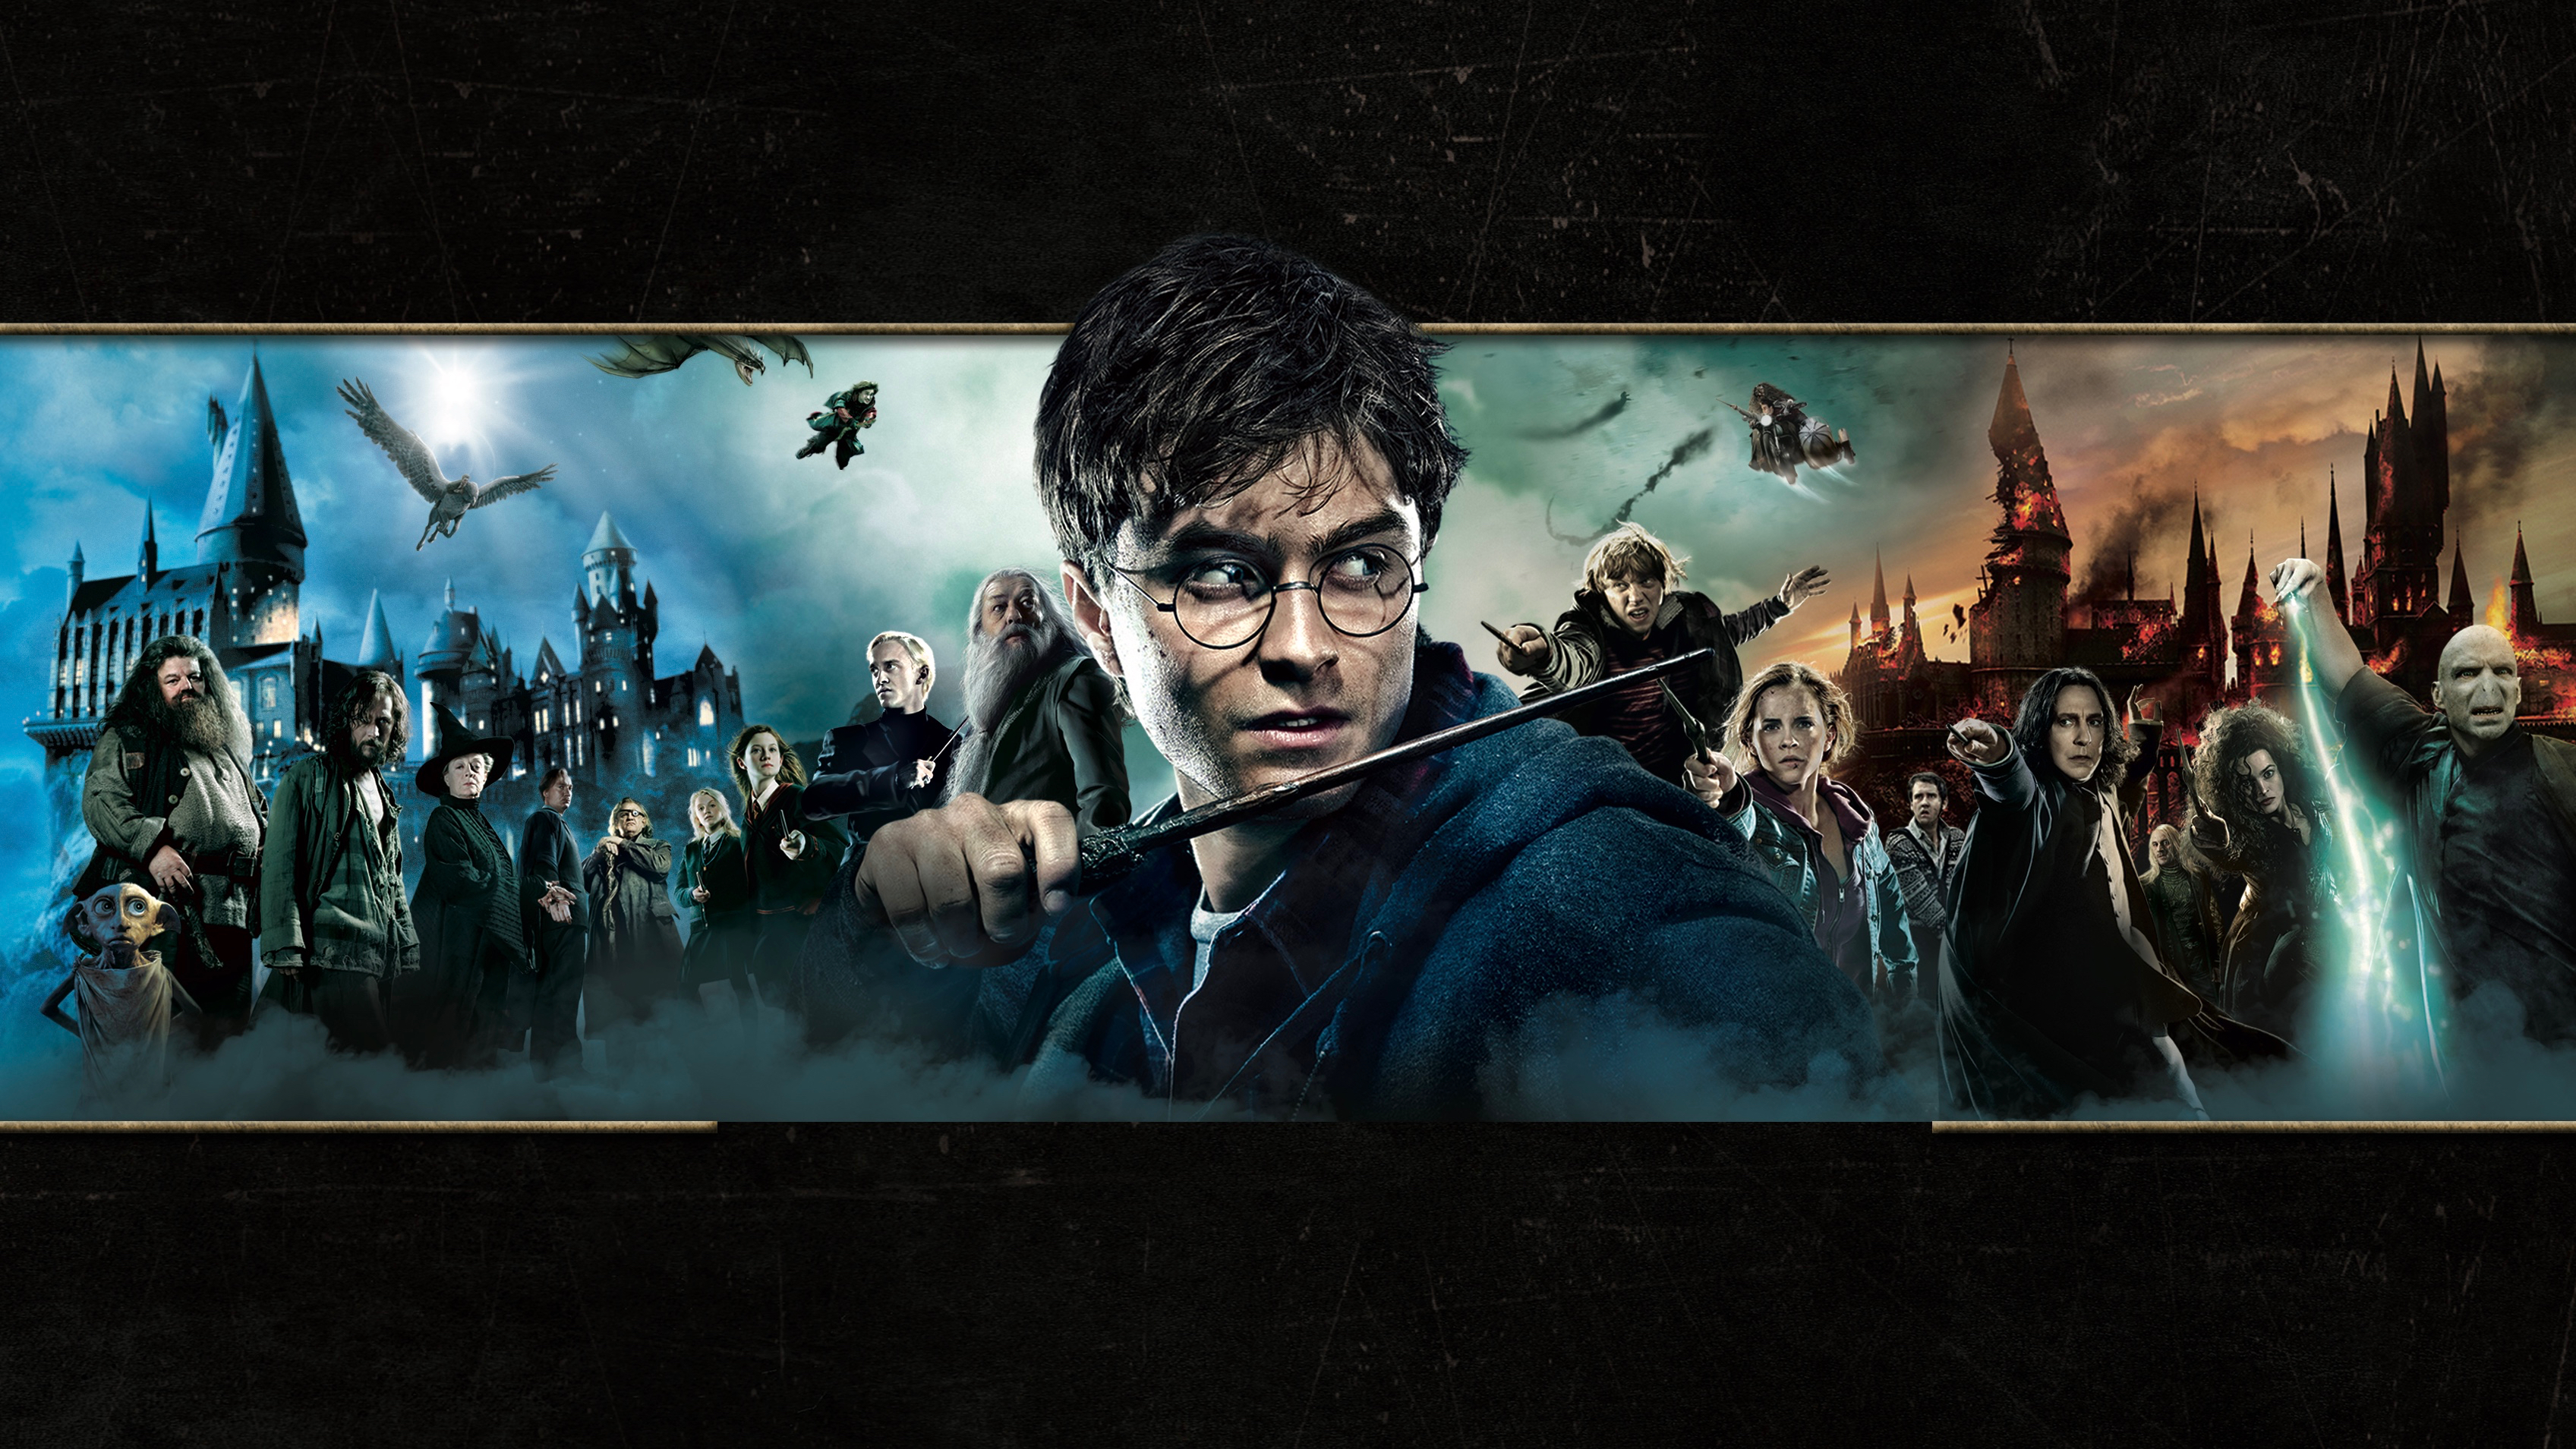 Descarga gratuita de fondo de pantalla para móvil de Harry Potter, Películas.